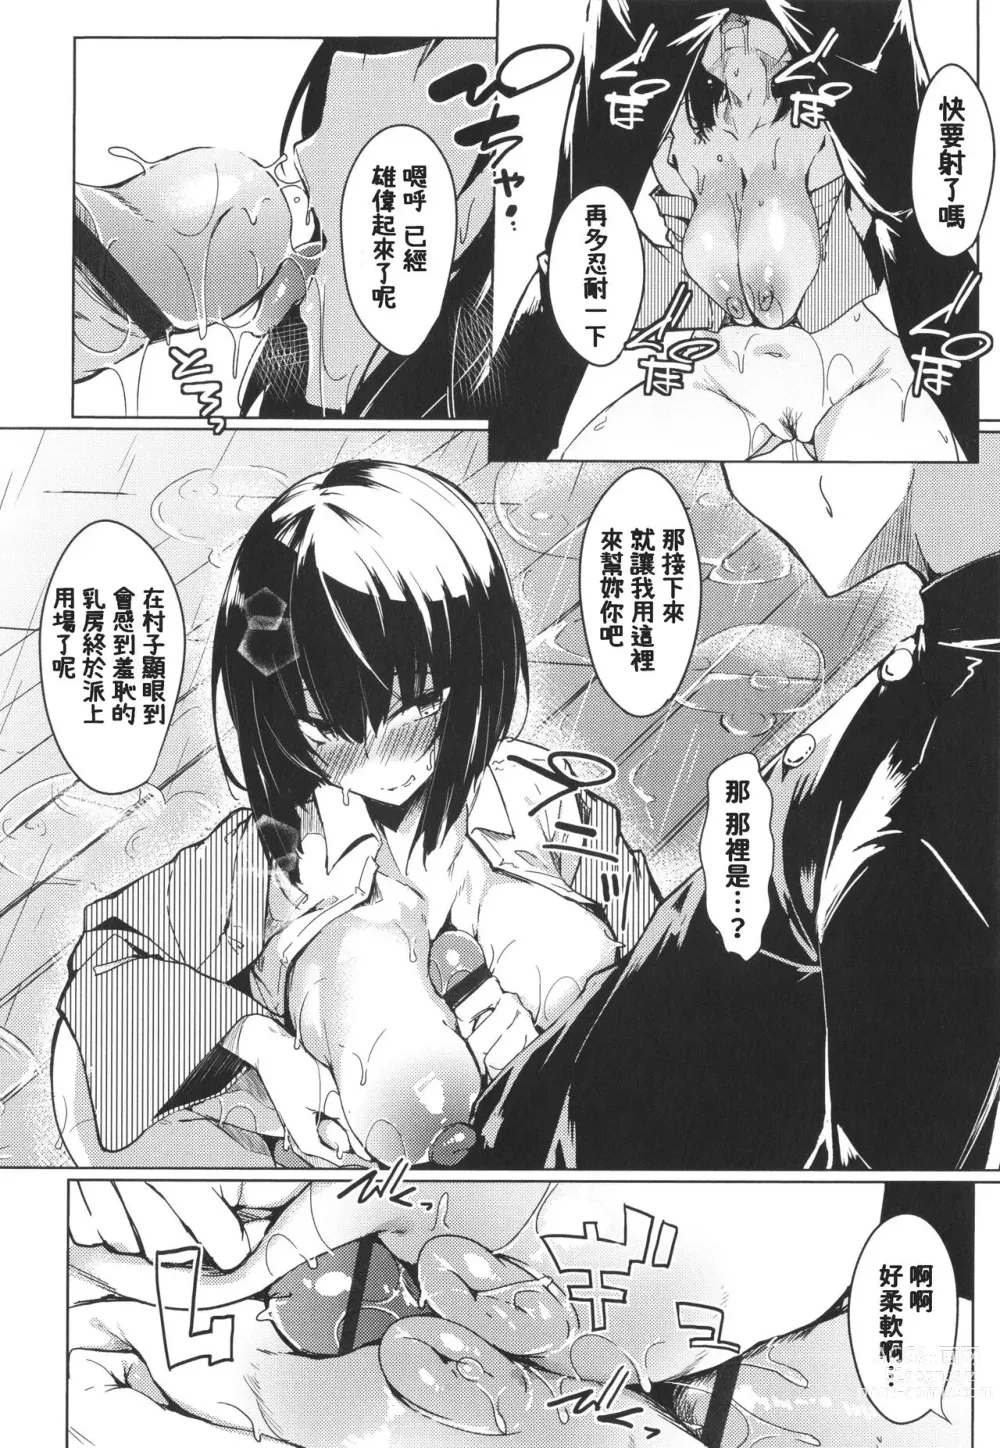 Page 8 of manga Yurei Shoujo no Oneigai